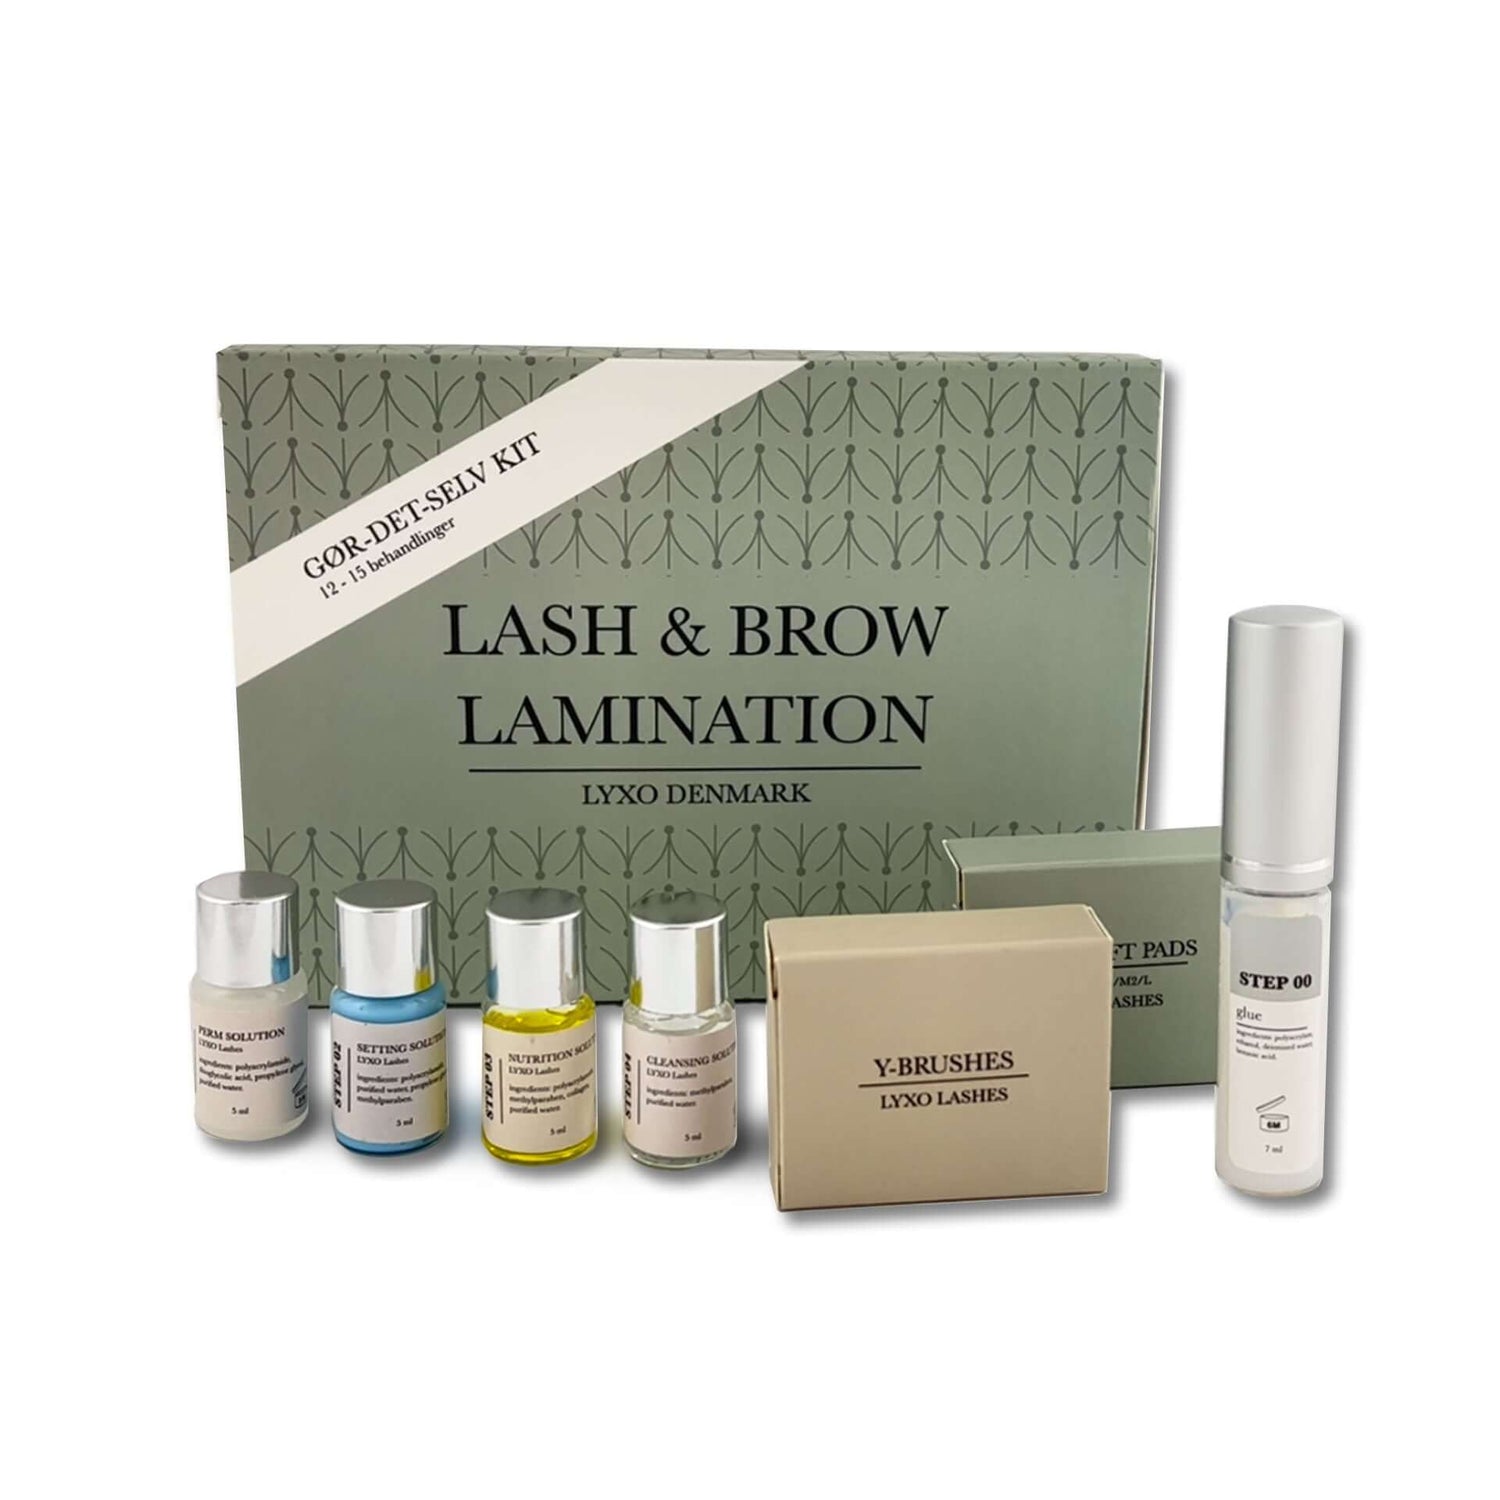 Lash Lift & Brow Lamination collection